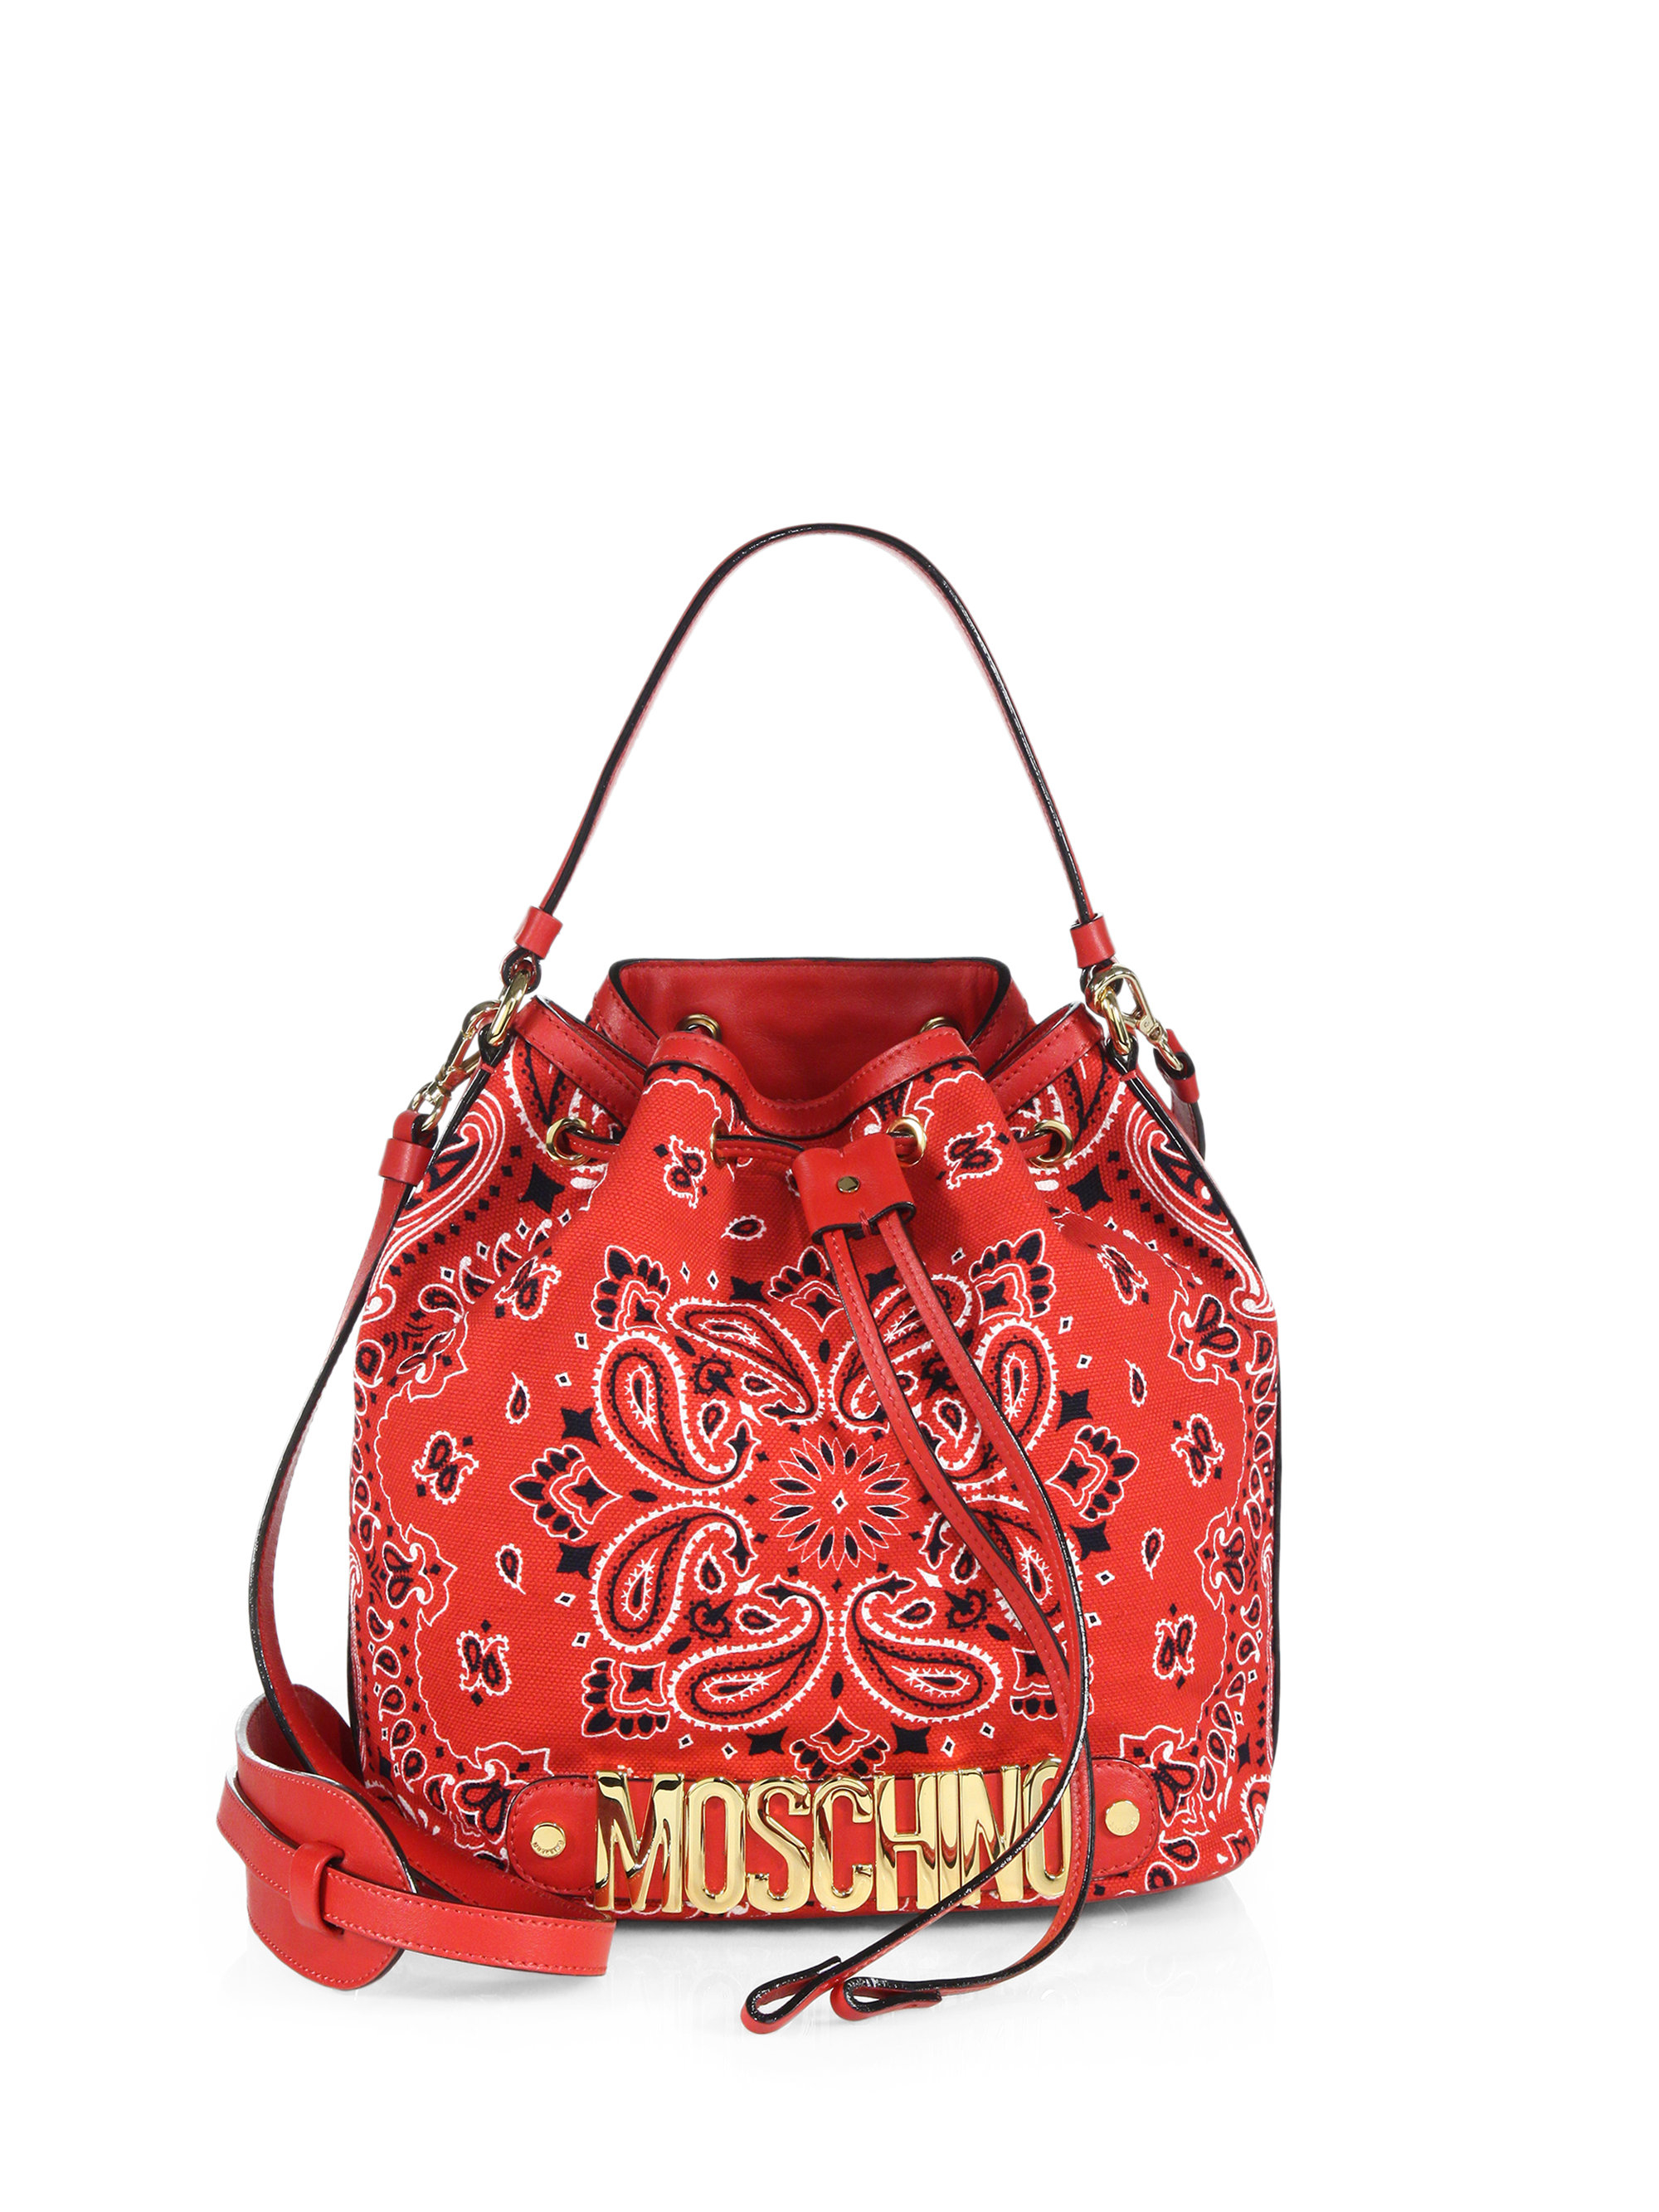 Moschino Bandana Canvas Bucket Bag in Red | Lyst